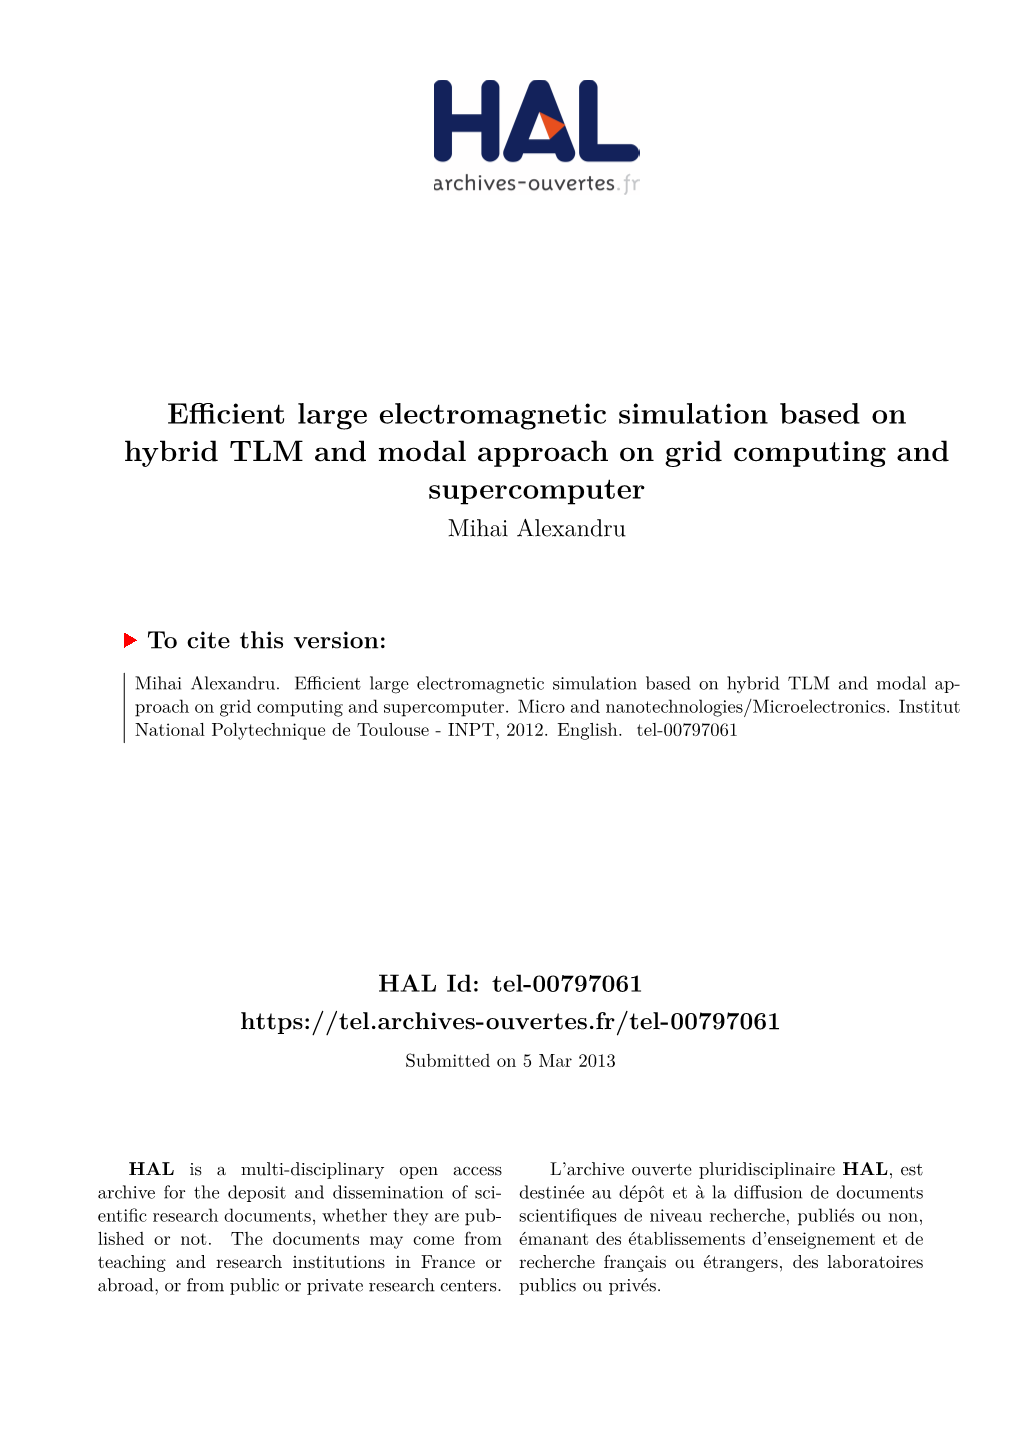 Efficient Large Electromagnetic Simulation Based on Hybrid TLM